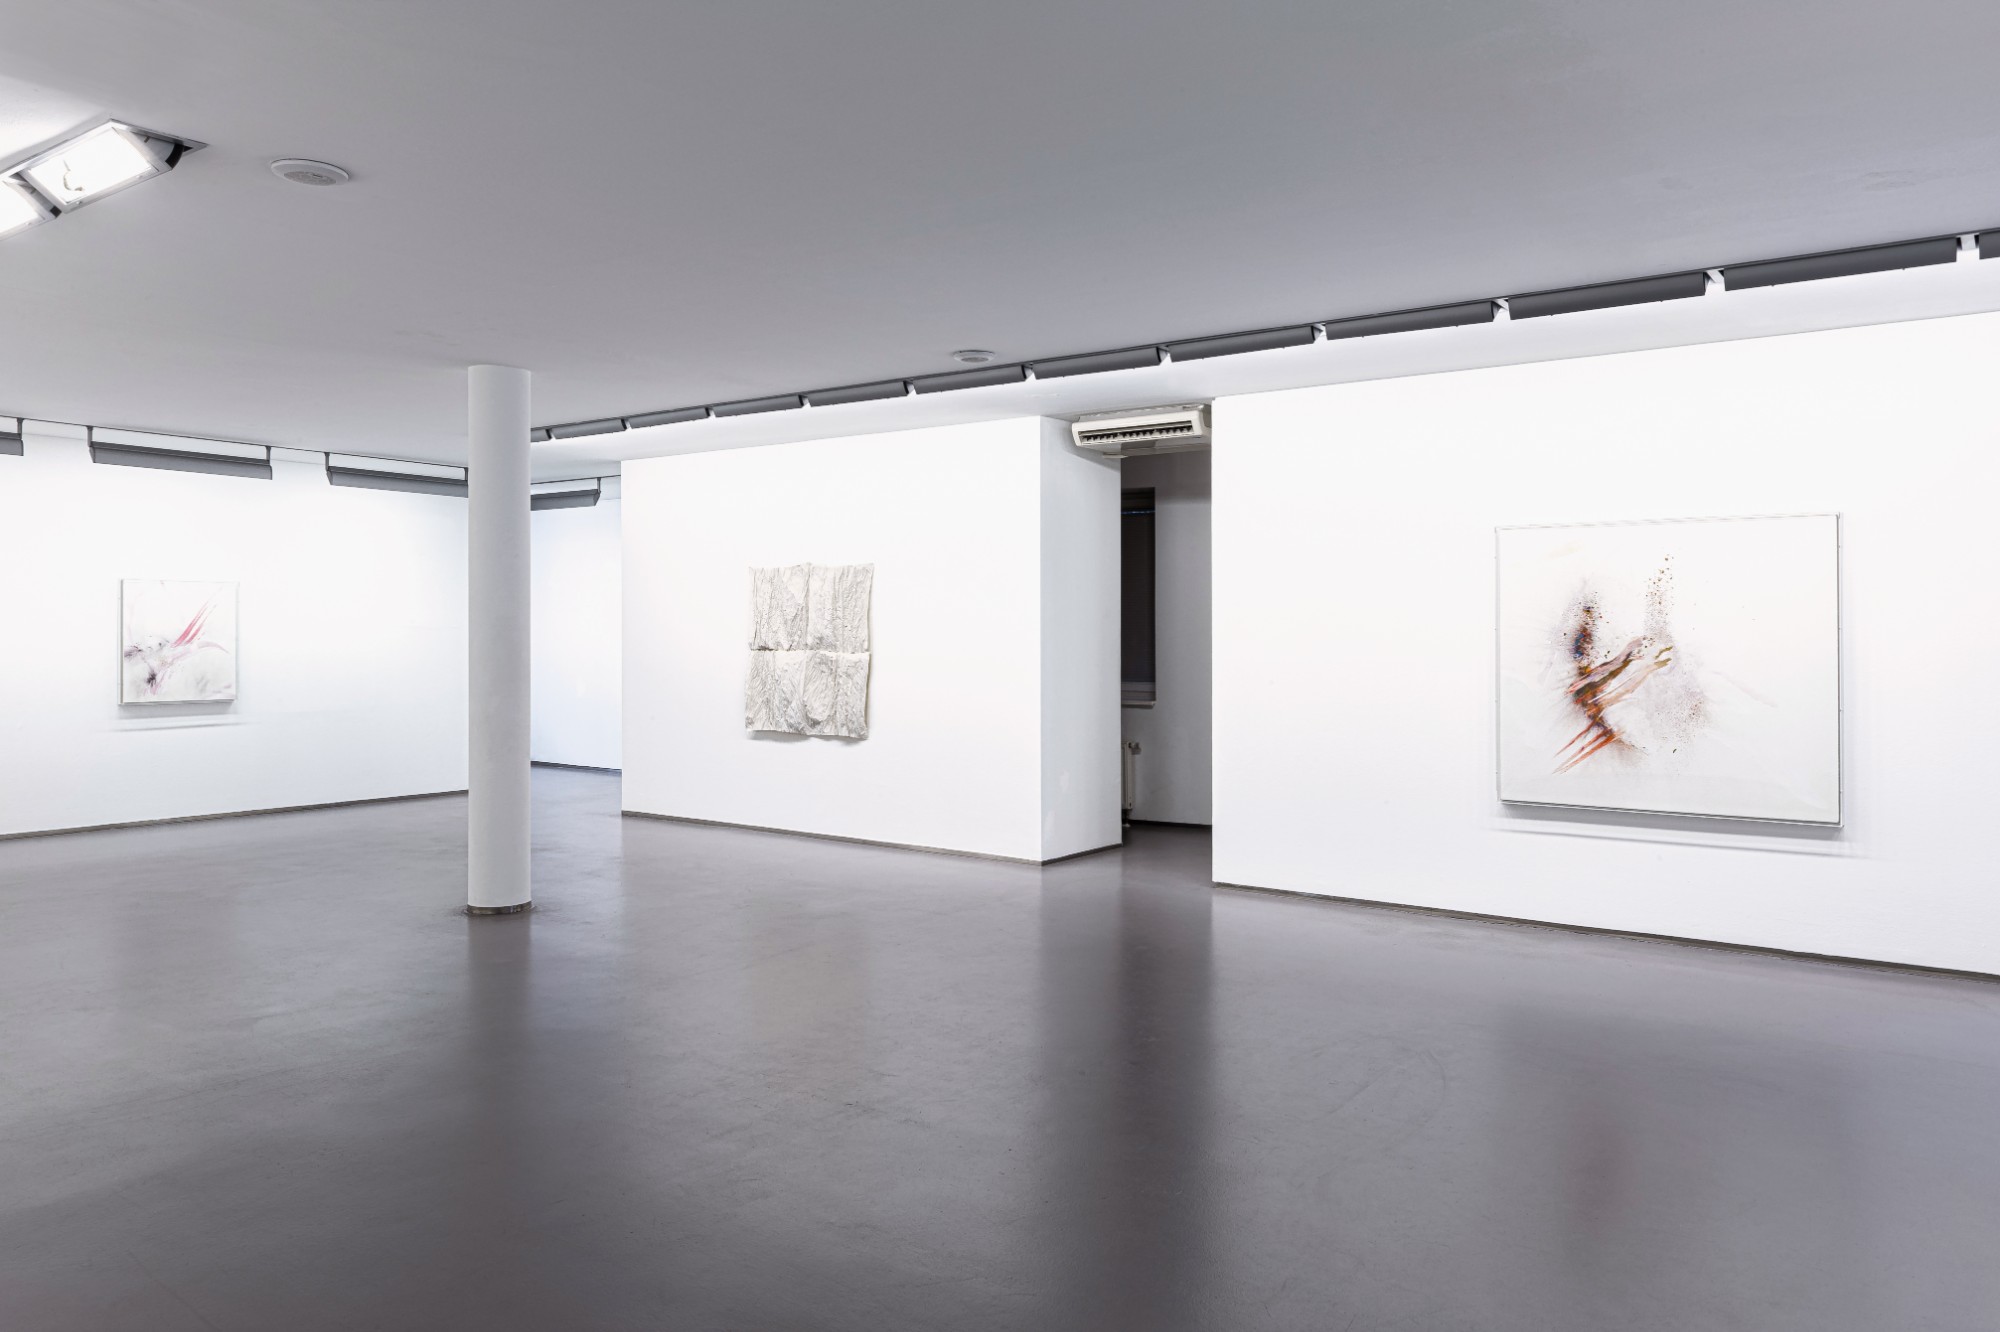 Body and Soul, Edith Dekyndt, Thilo Heinzmann, Elke Silvia Krystufek, Exhibition view, 2021